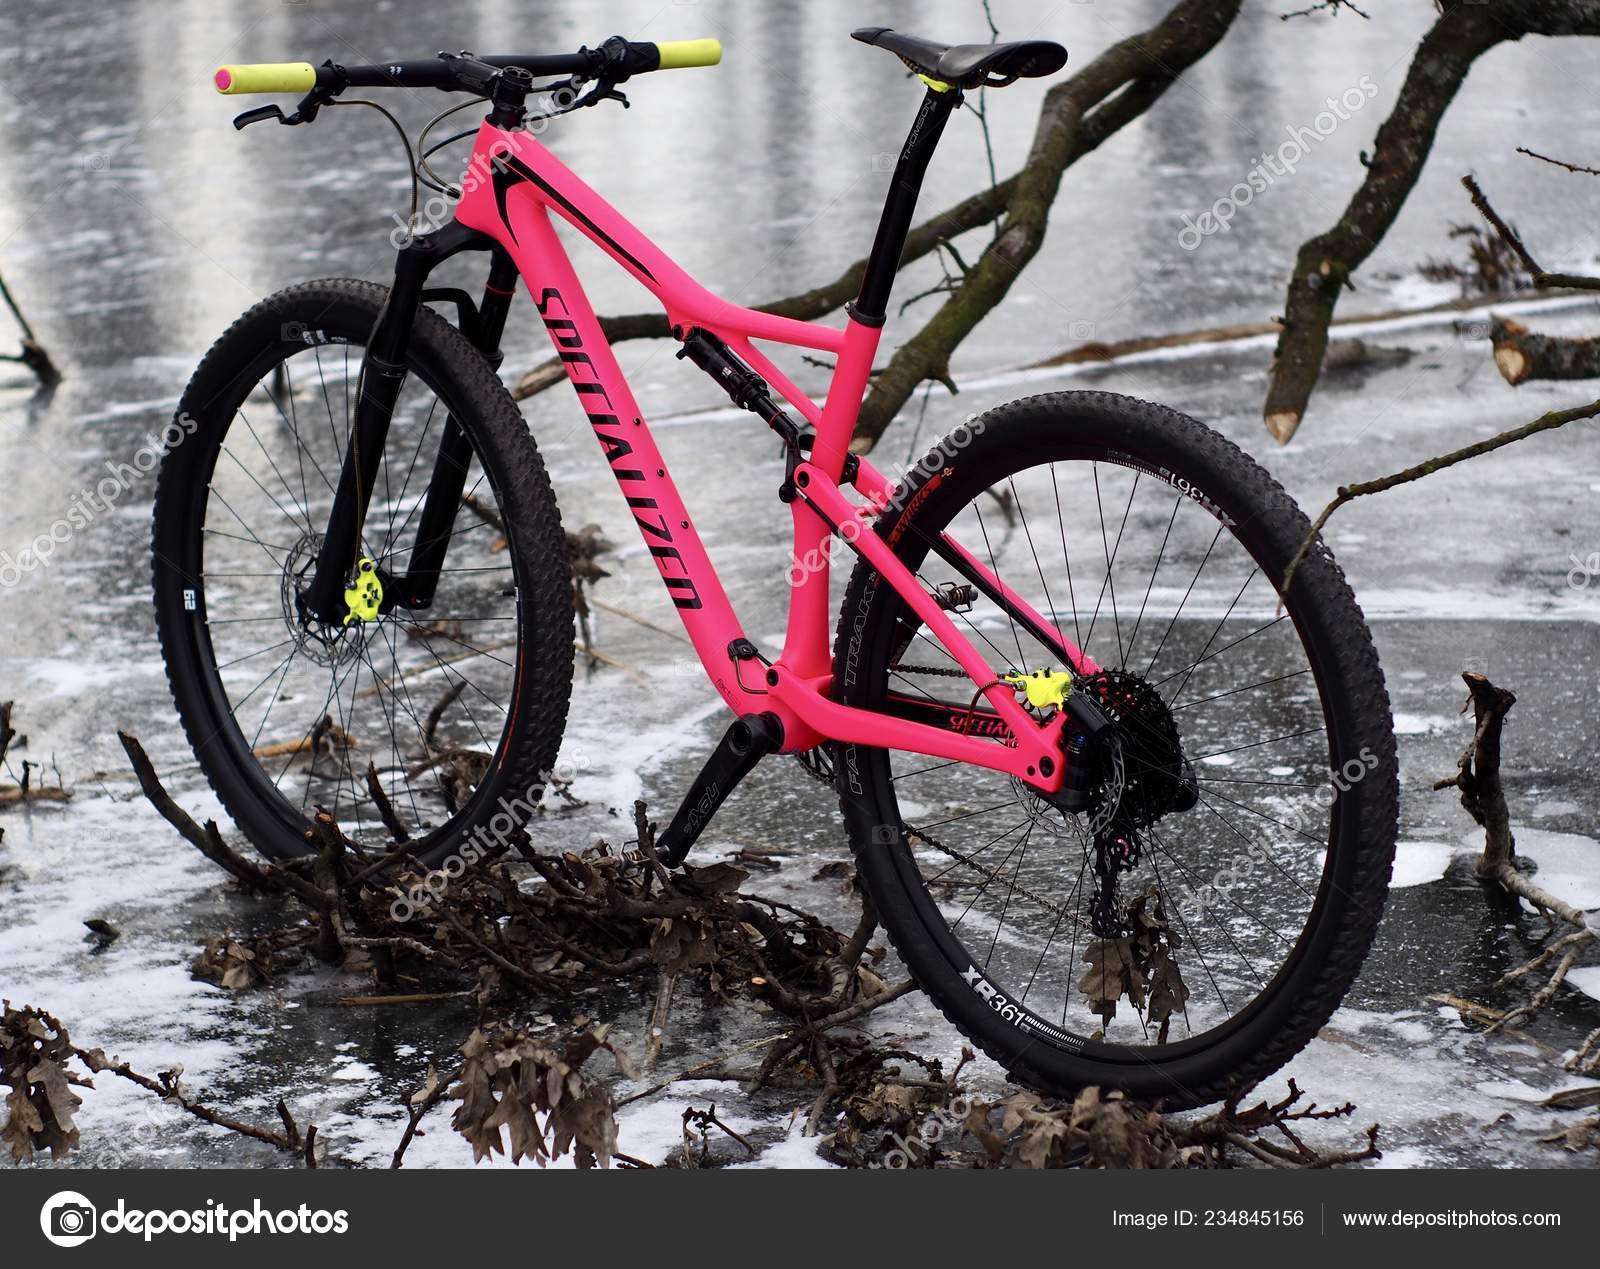 neon pink mountain bike